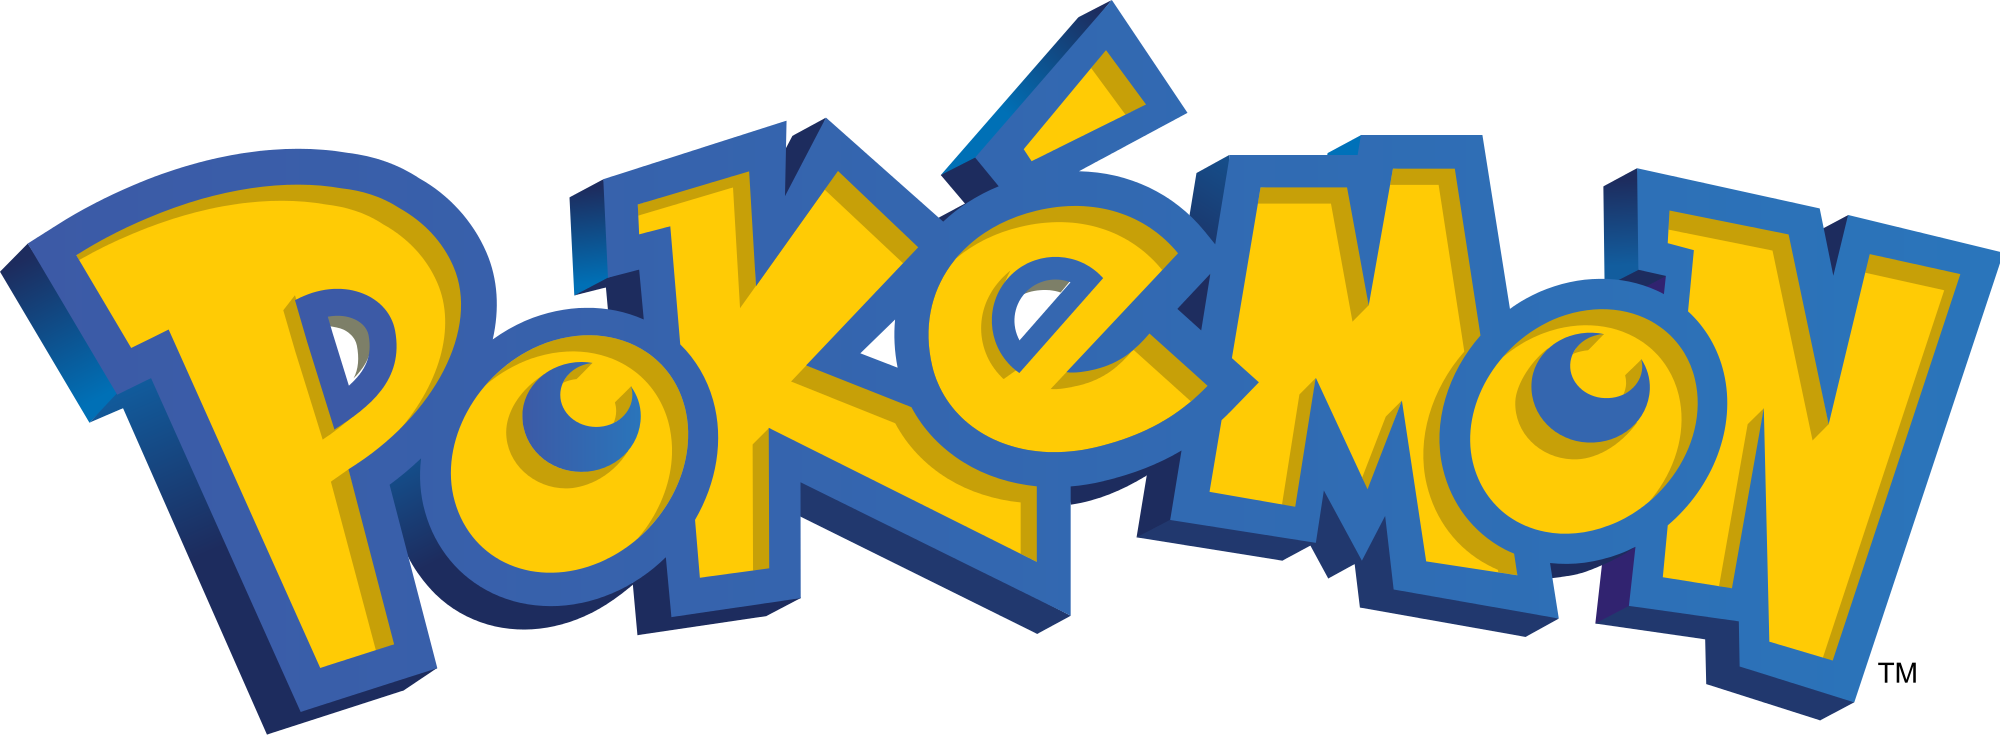 Image of Pokemon G